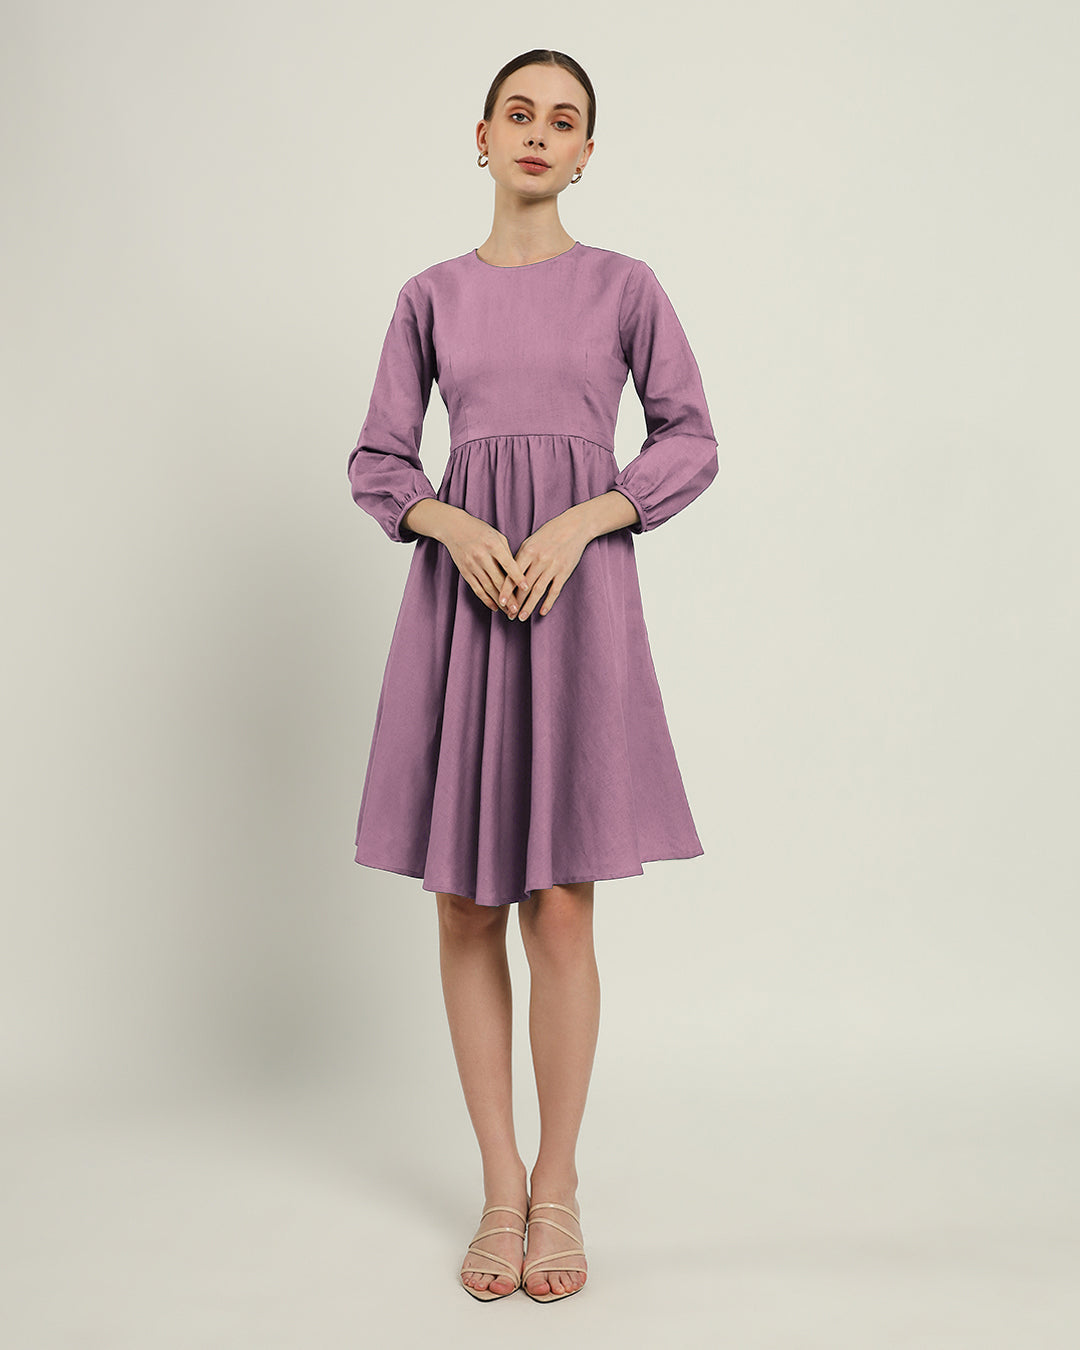 The Exeter Purple Swirl Dress